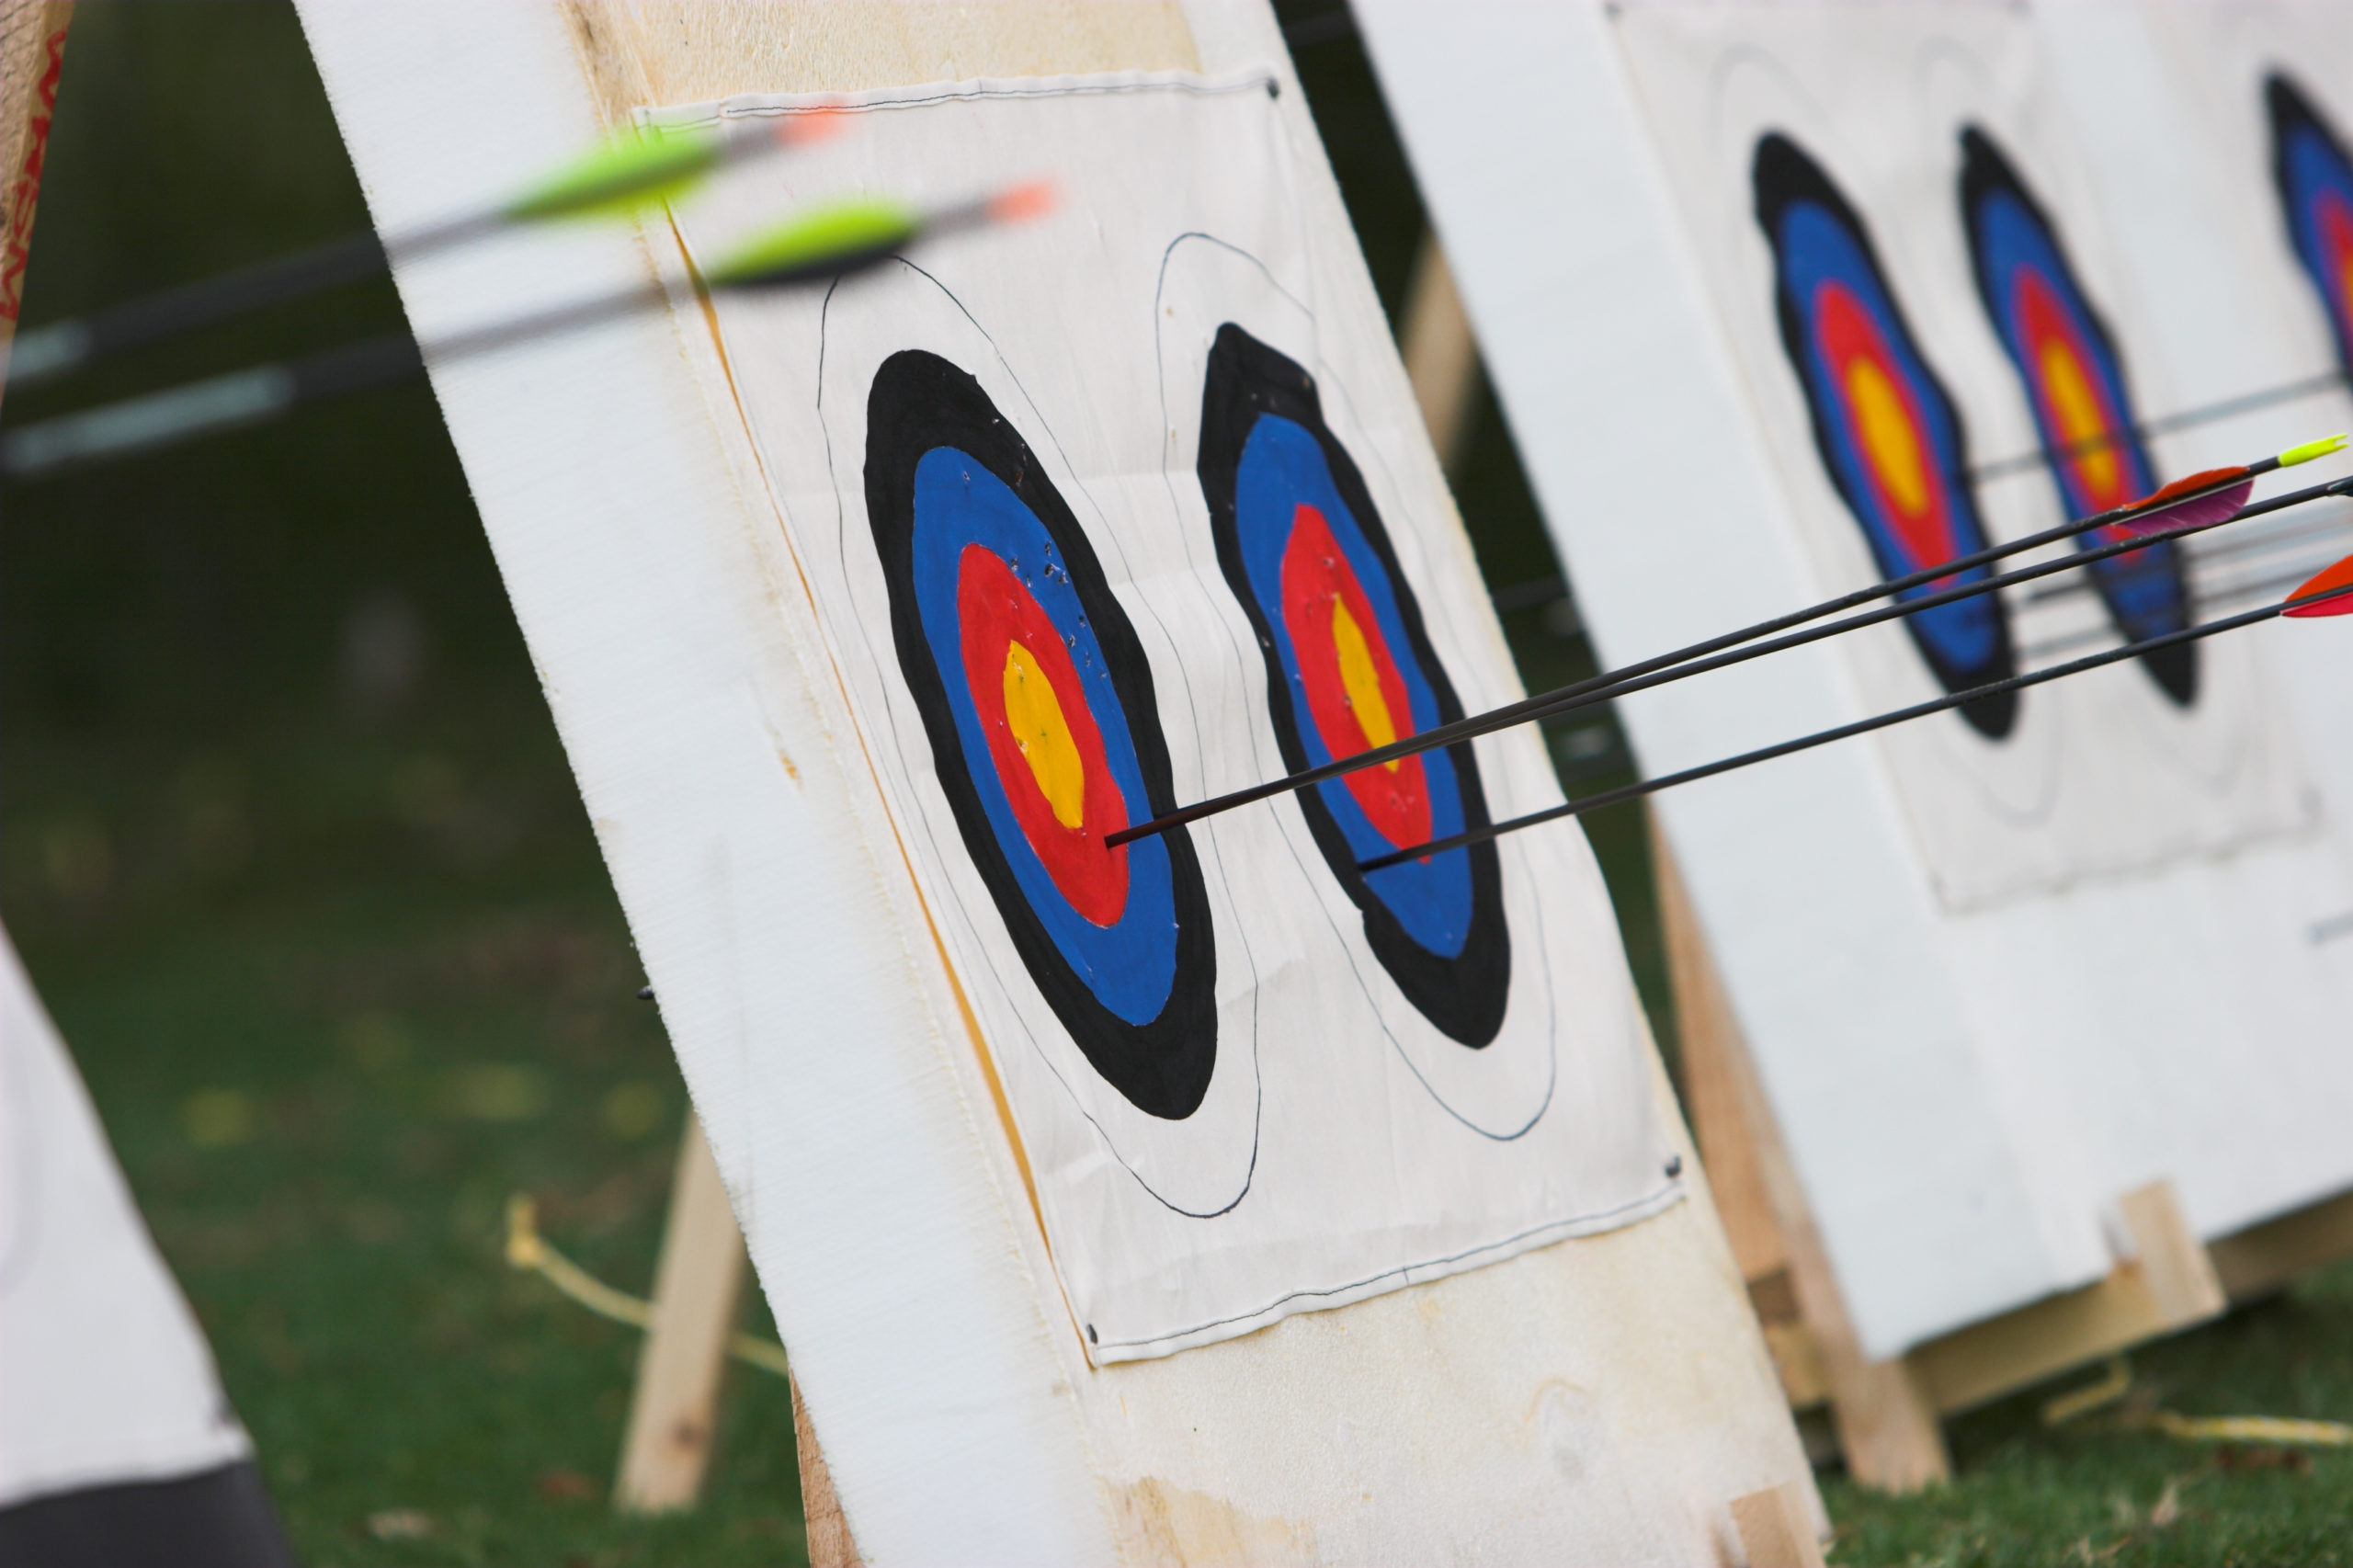 Archery side view of target wit harrows